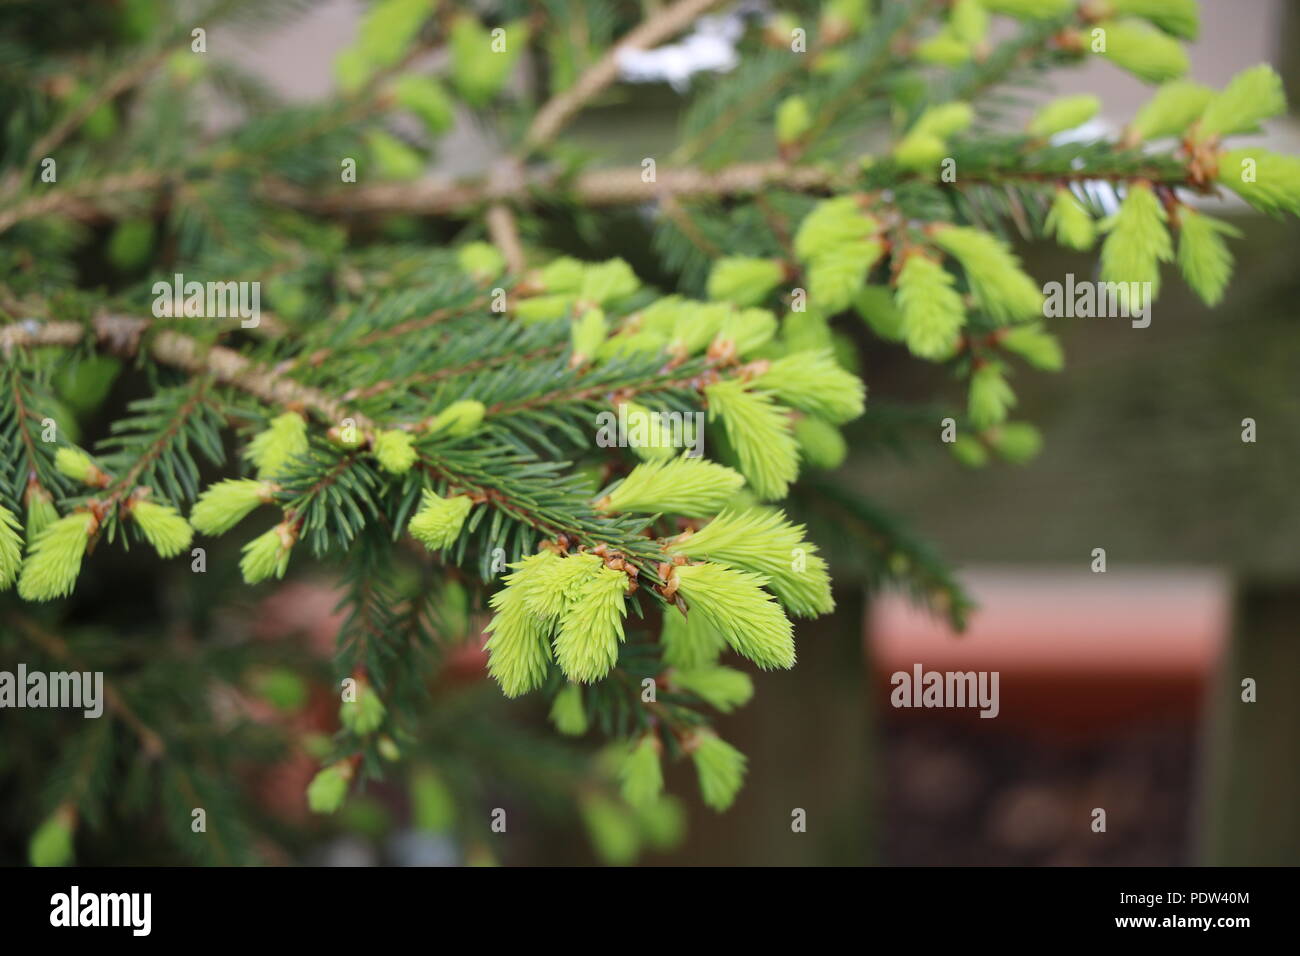 New Growth on Pine Tree, Bright New Pine Needles on Christmas Tree. Stock Photo